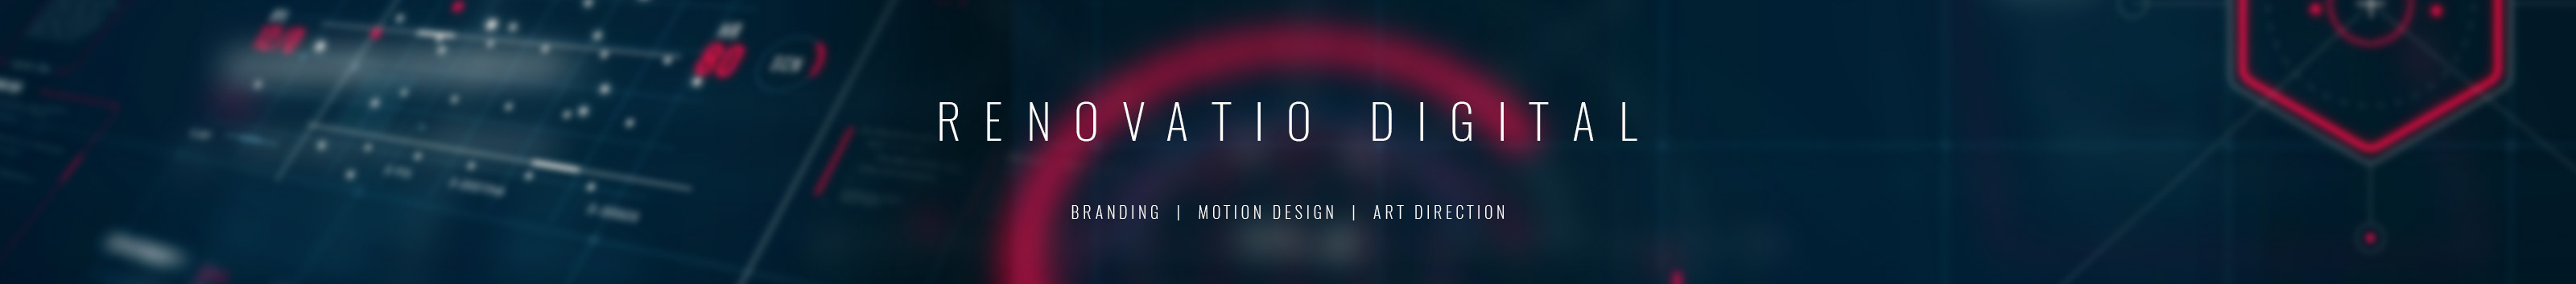 Renovatio Digital's profile banner